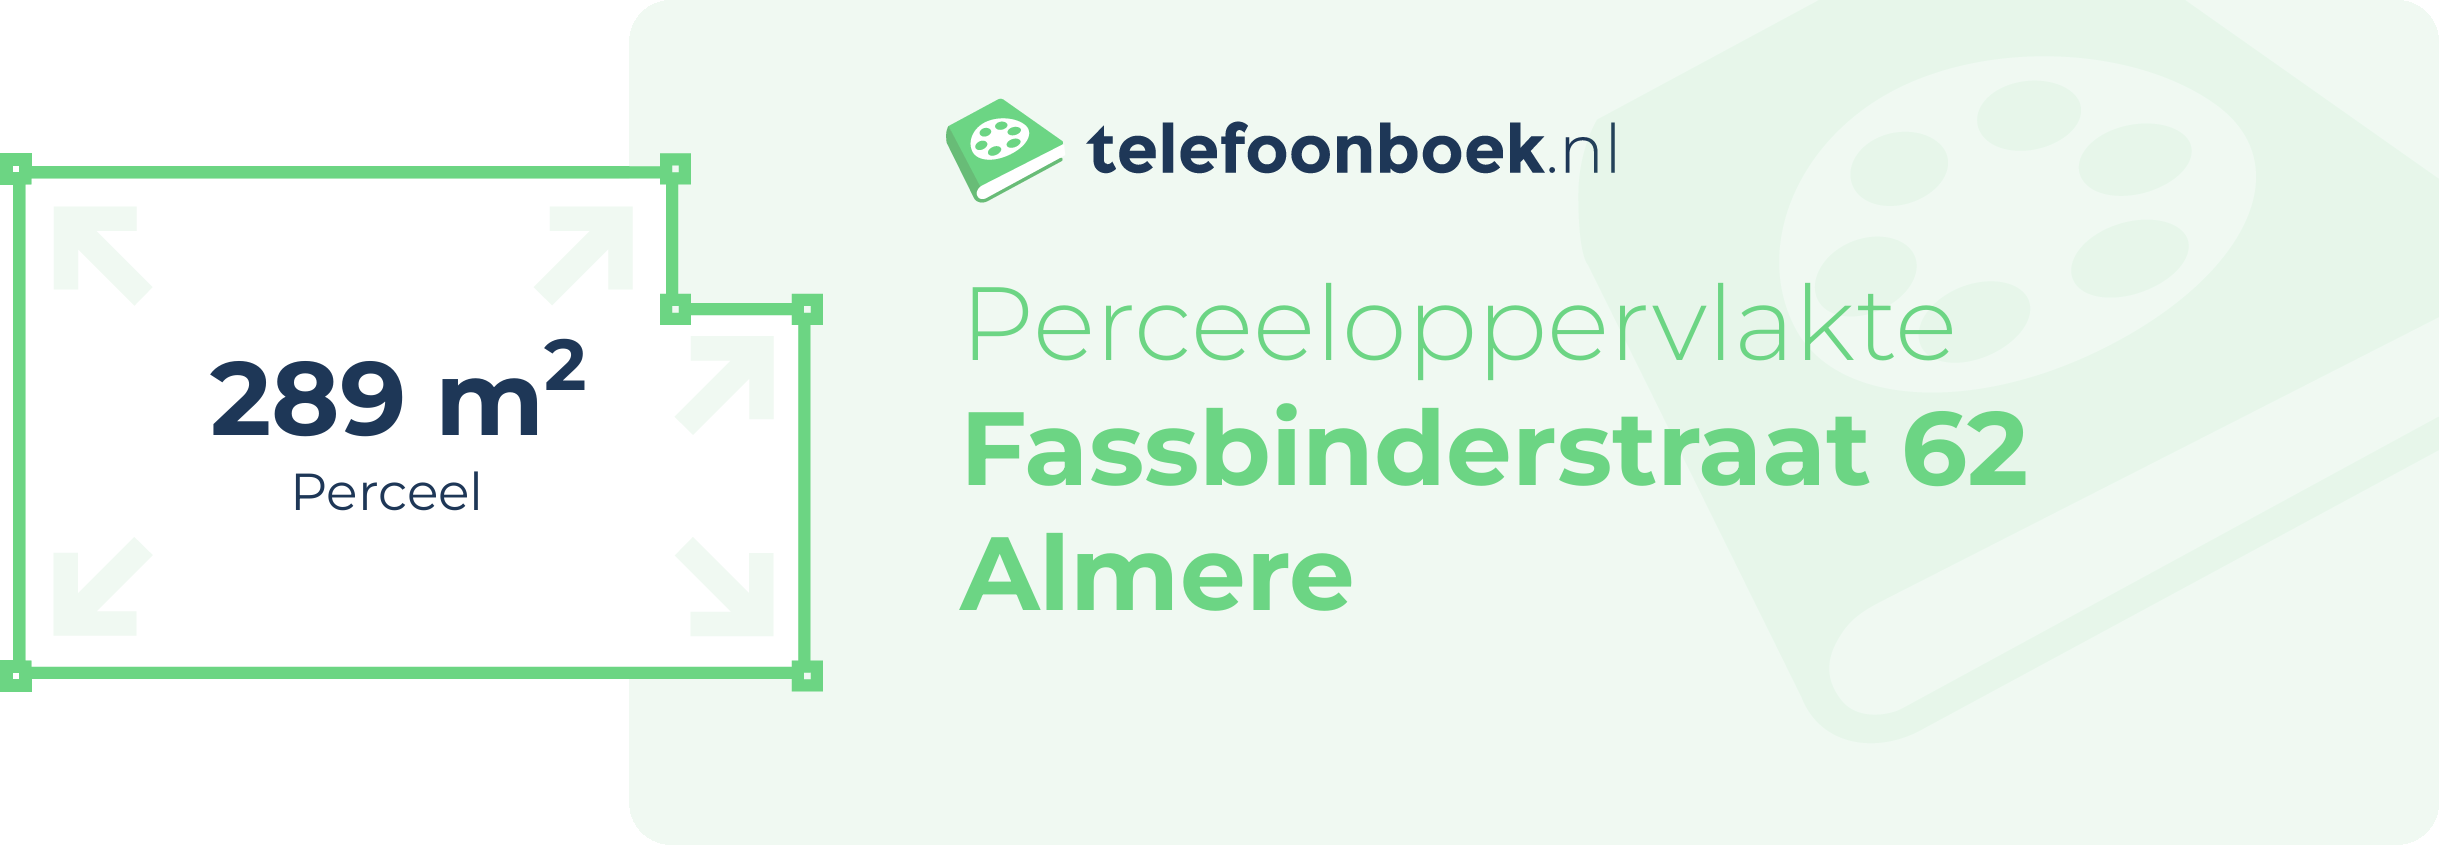 Perceeloppervlakte Fassbinderstraat 62 Almere